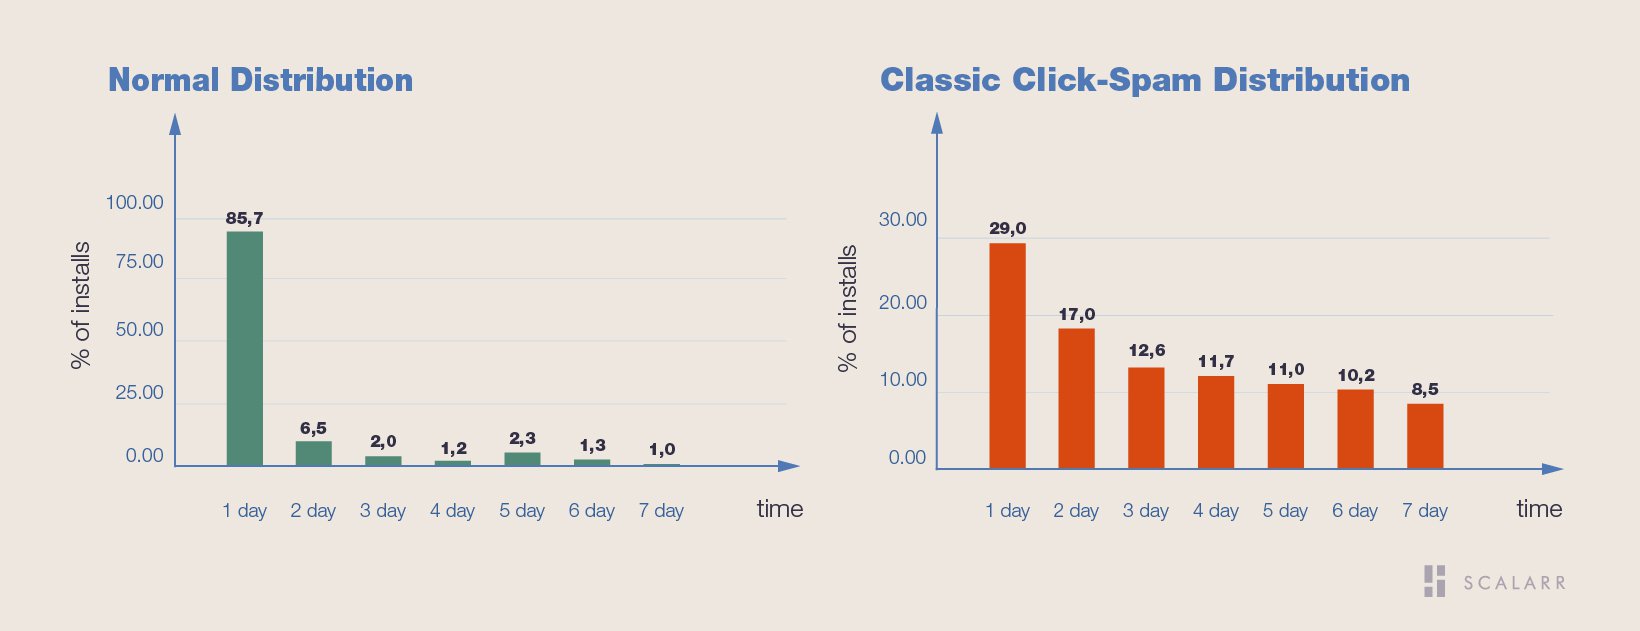 Classic click spam distribution